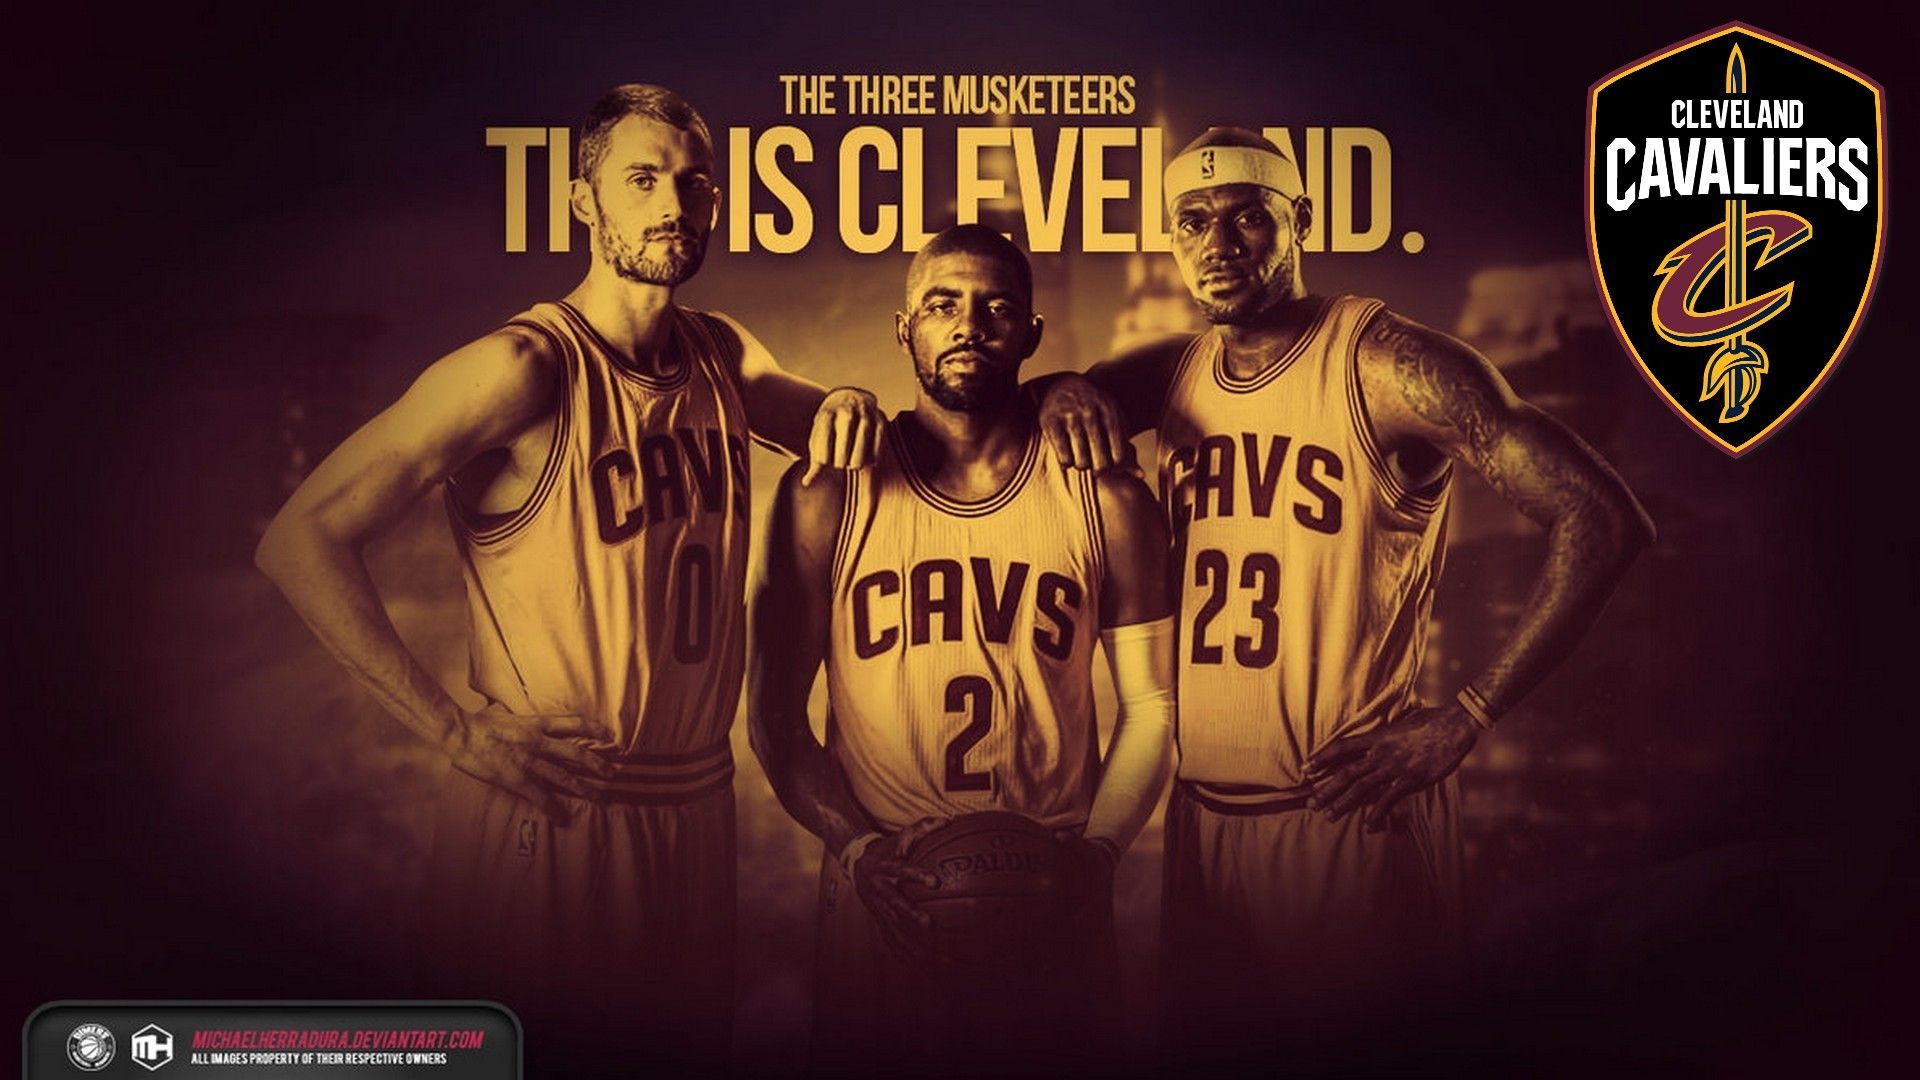 Big 3 Cleveland Cavaliers Wallpaper HD. Cavaliers wallpaper, Cavs